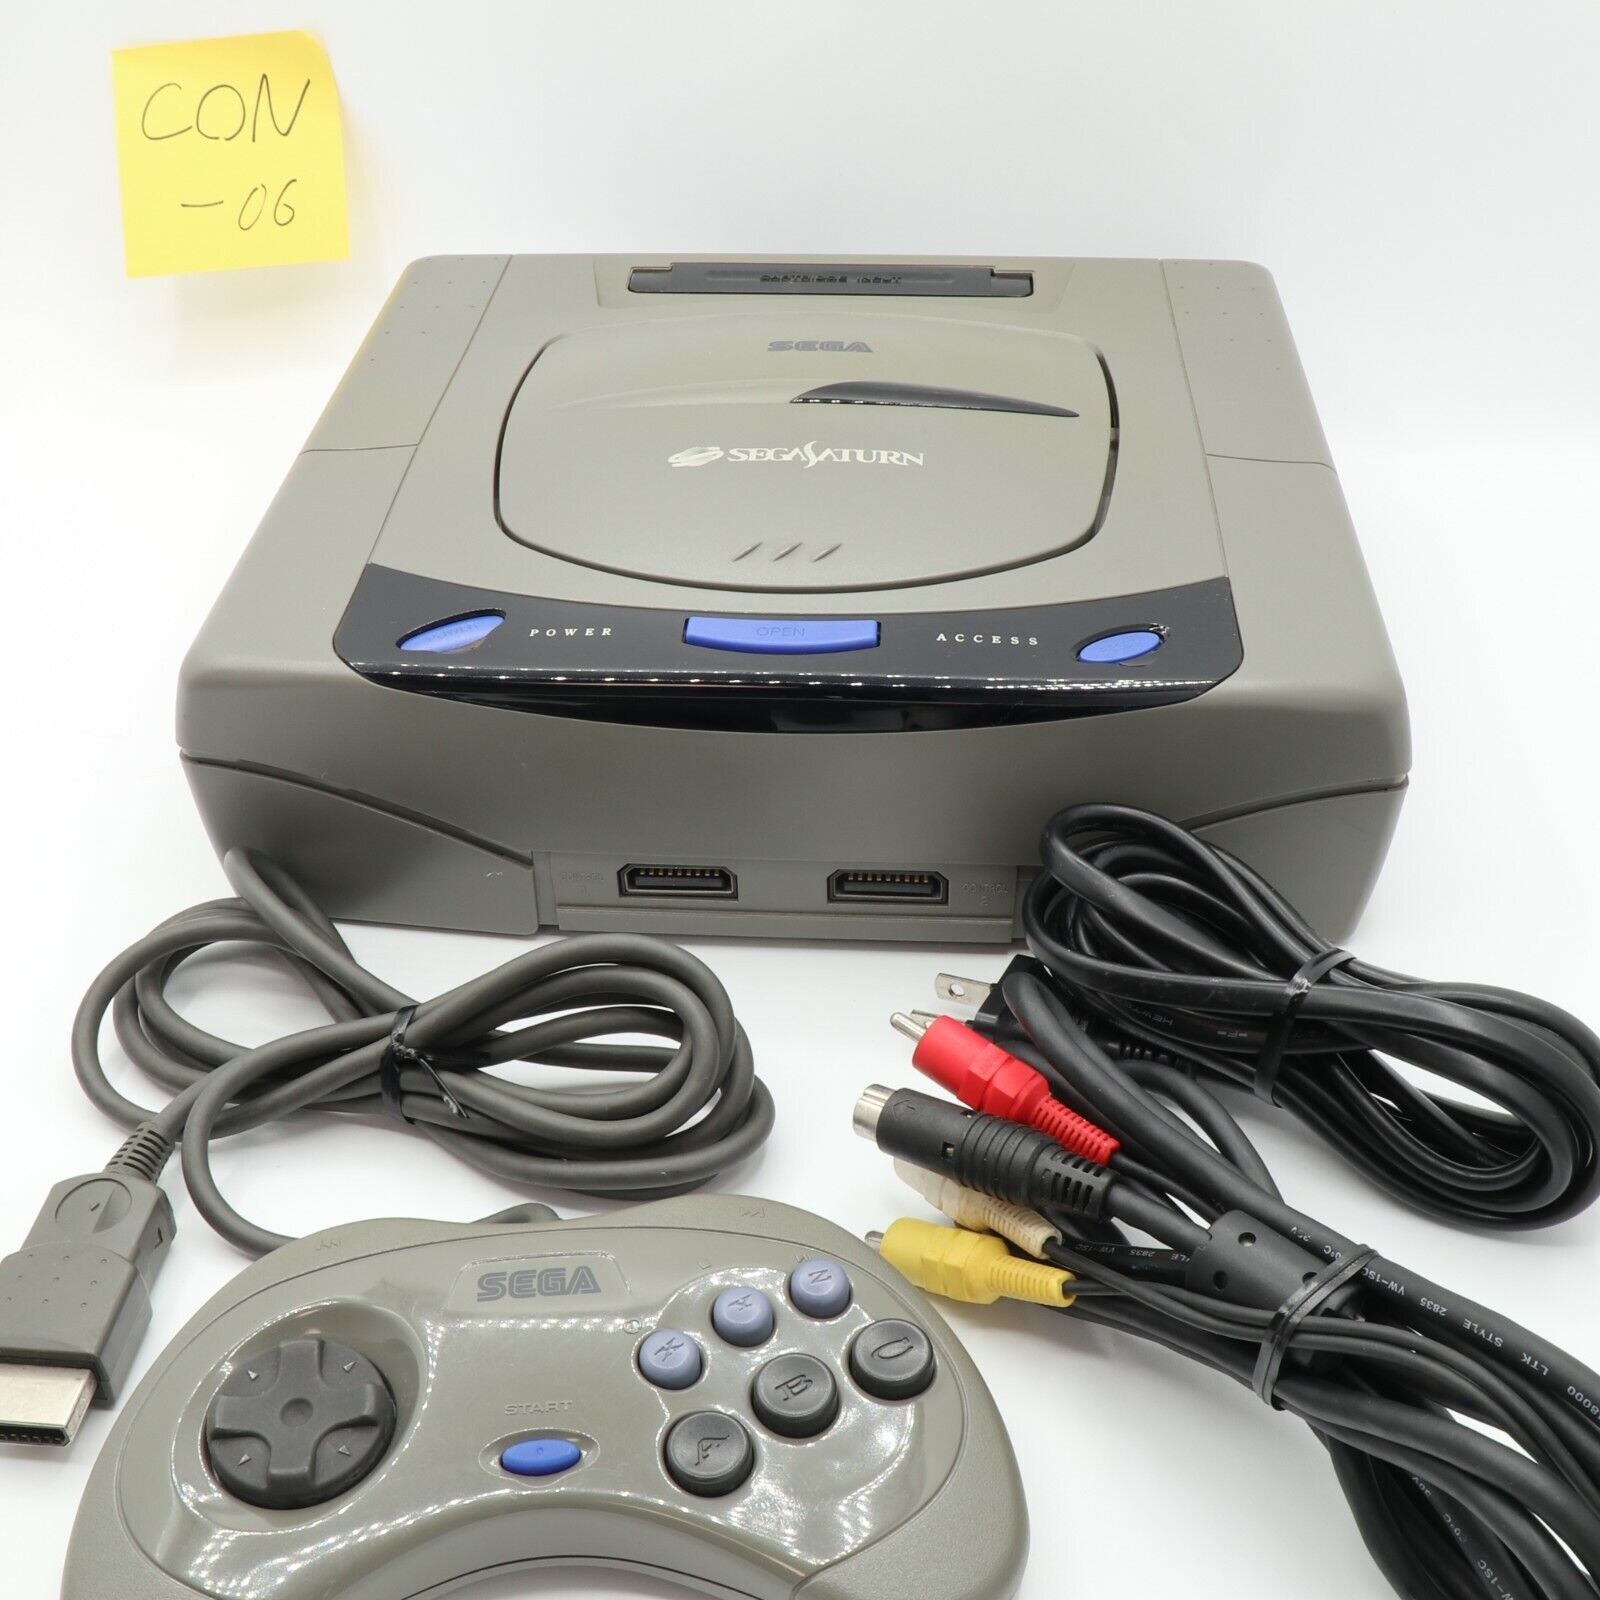 Sega Saturn Console Gray Tested Controller Charger Cable De laatste baan is goedkoop